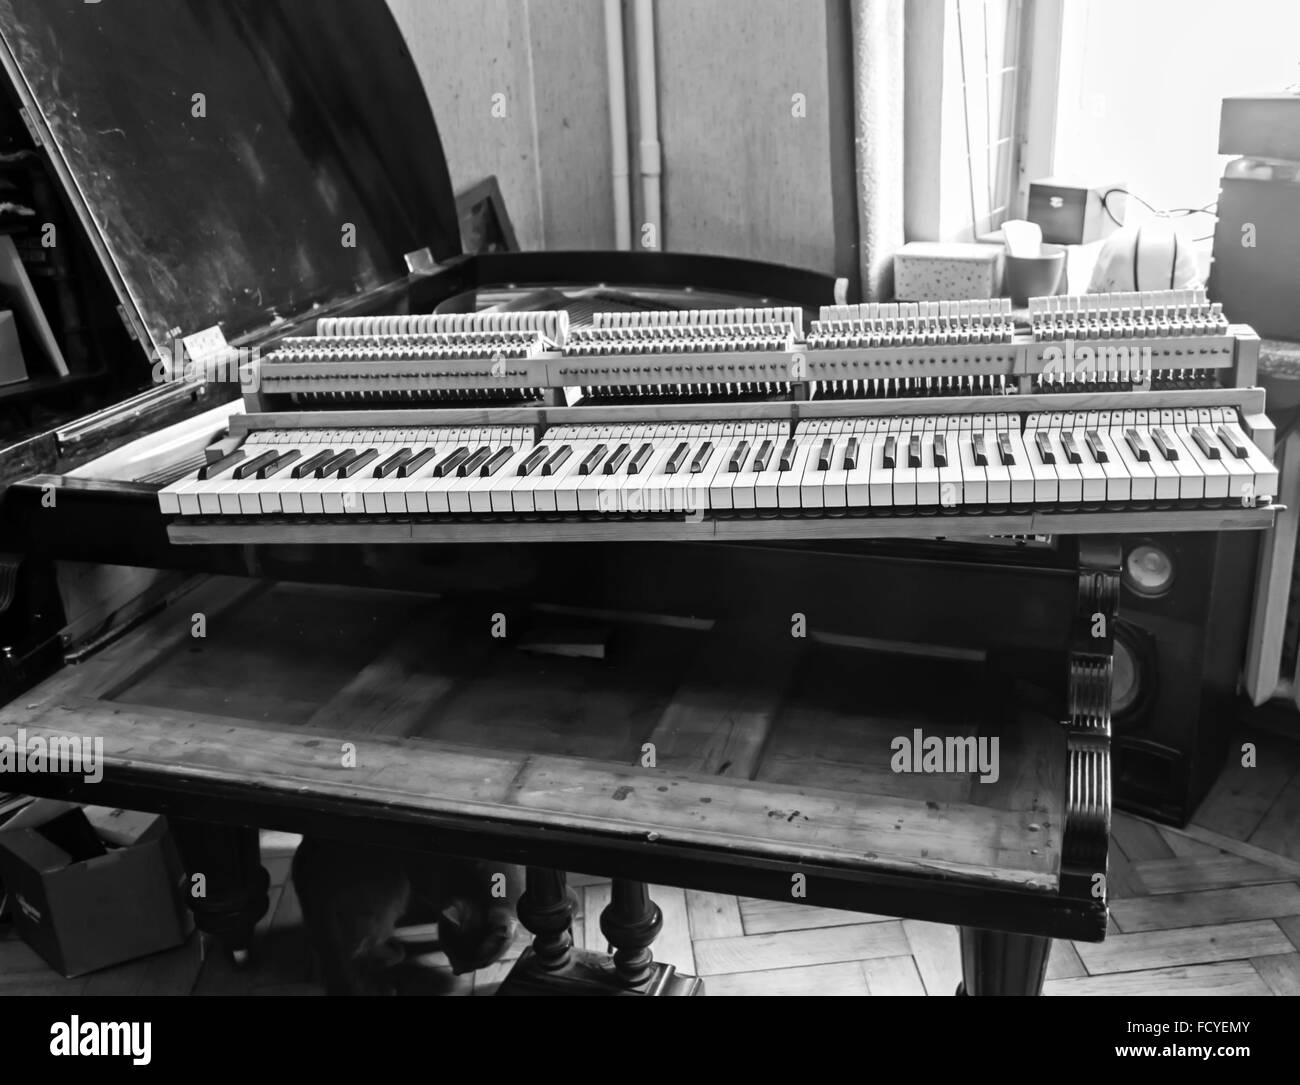 Piano restoration photo in black and white colors Stock Photo